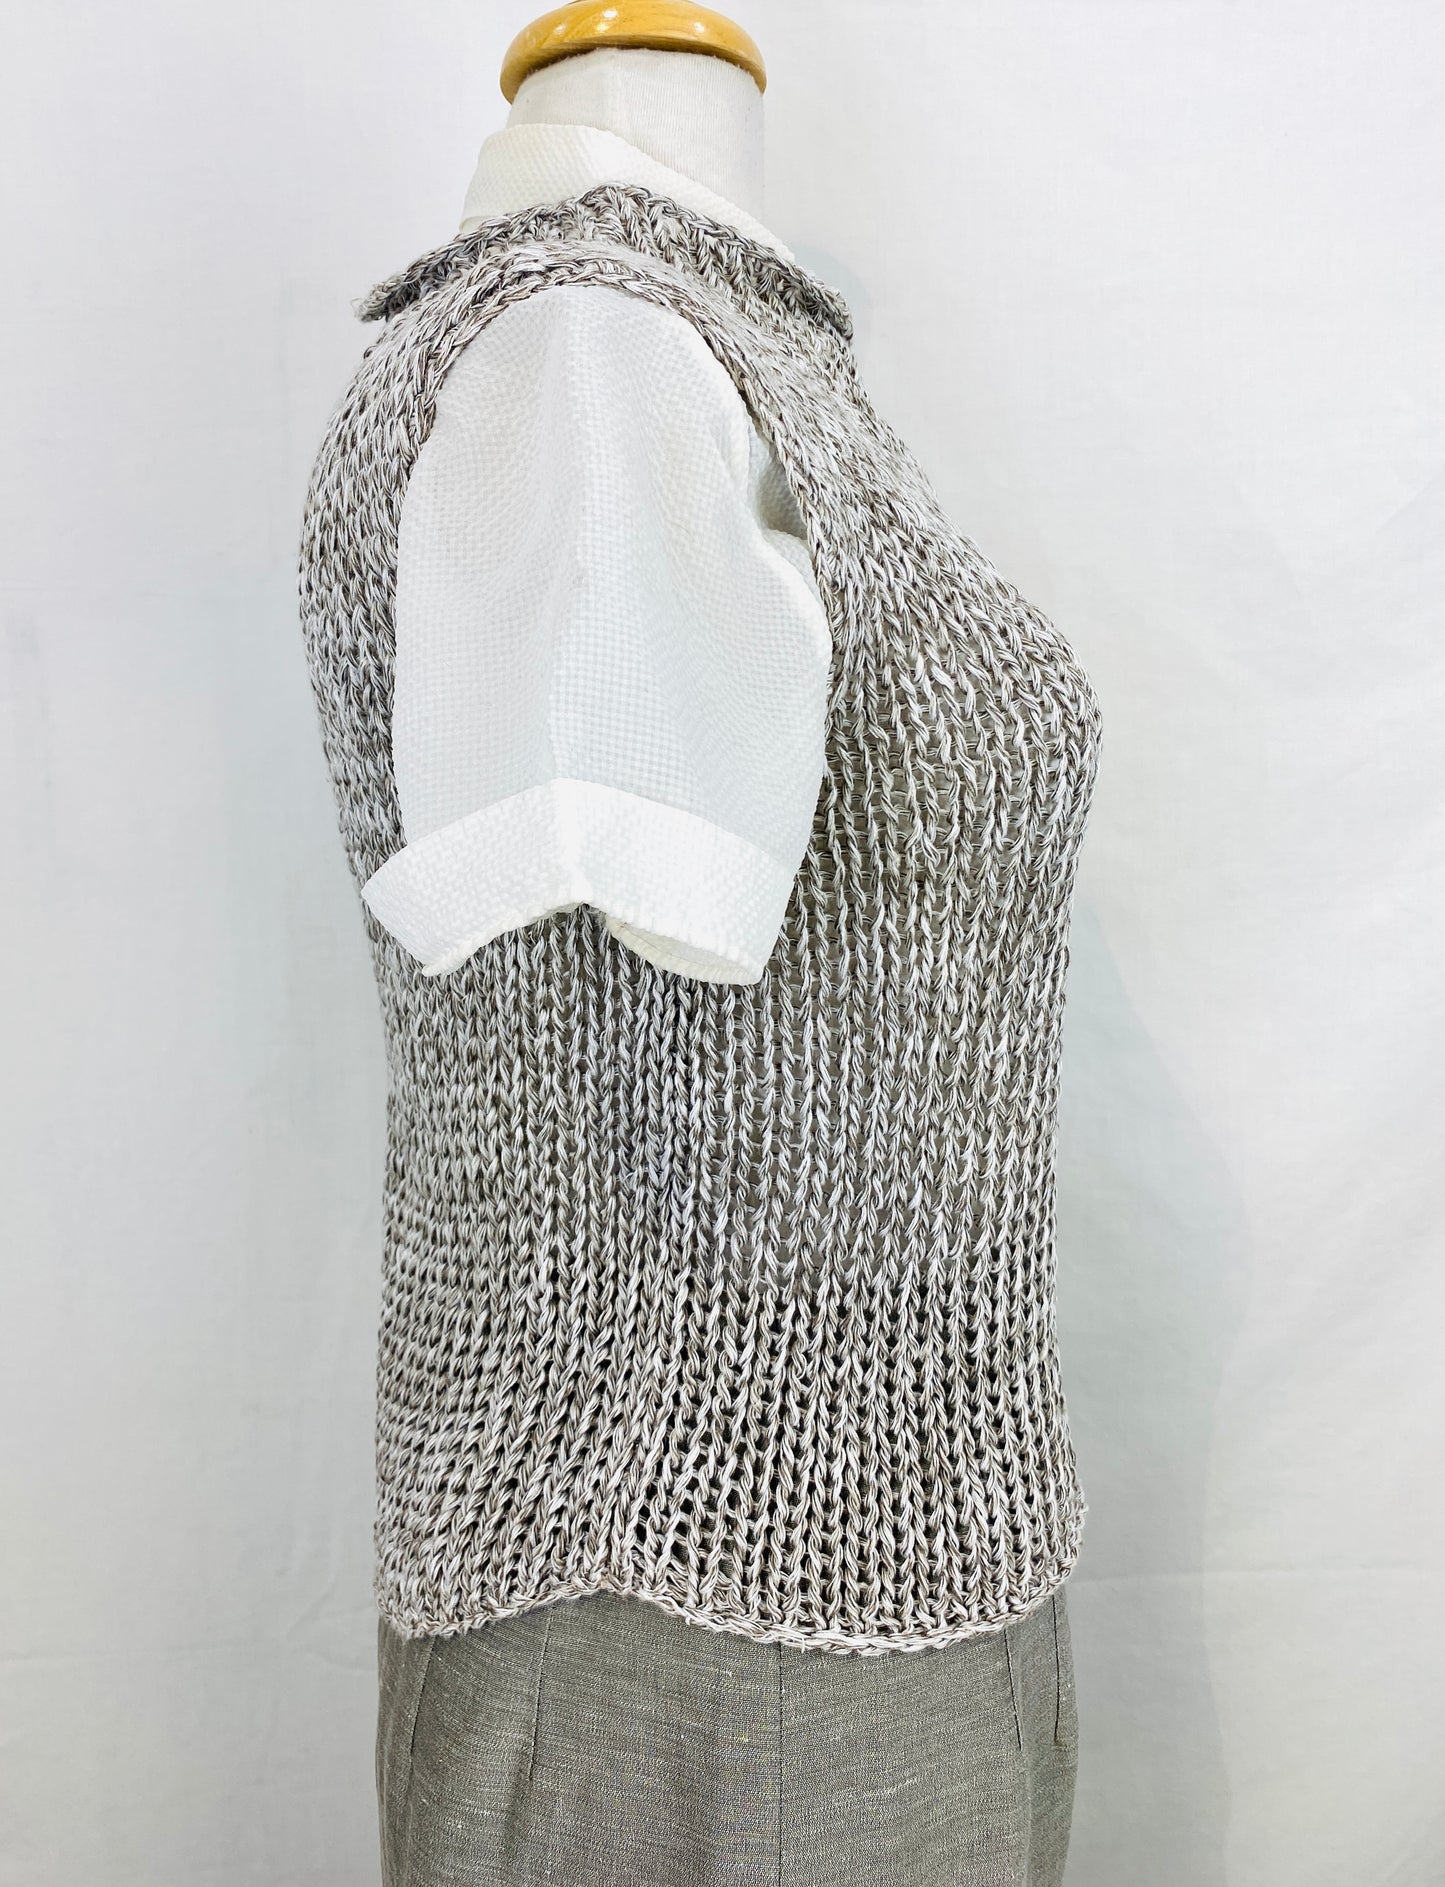 Vintage 1990s Eileen Fisher Grey Linen Knit Tank Top